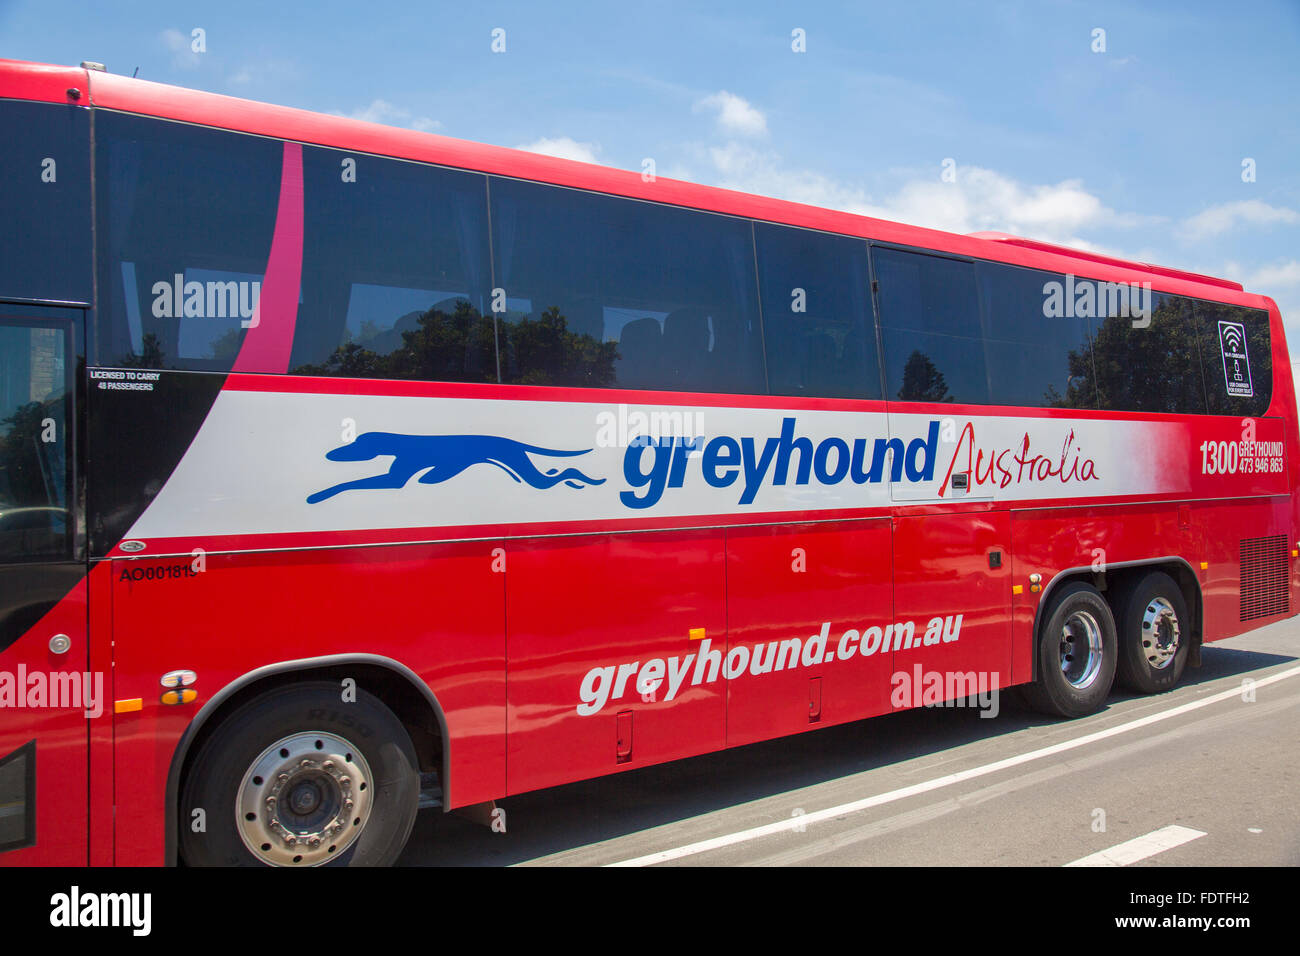 Greyhound Australia Reisen rote Bus in new South Wales, Australien  Stockfotografie - Alamy